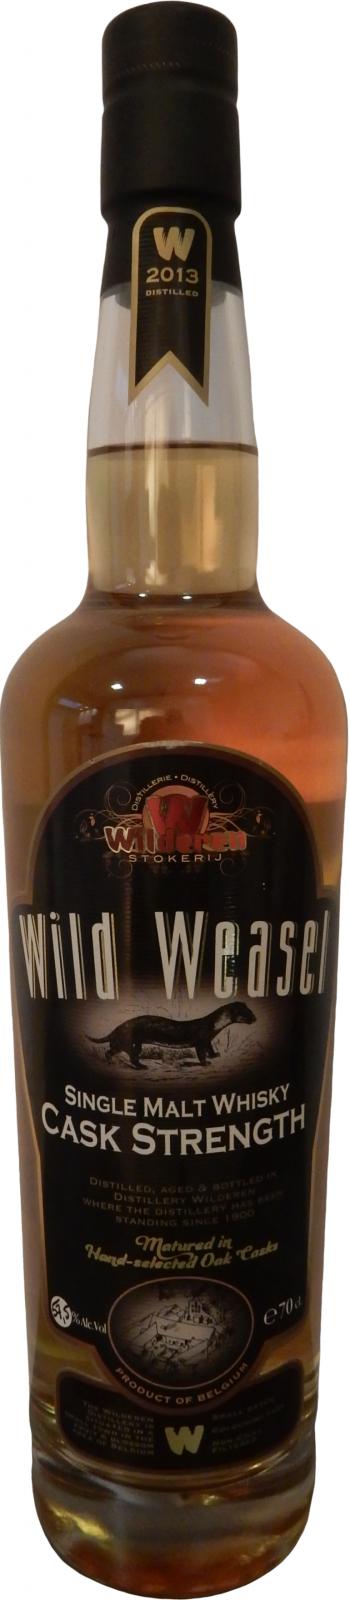 Wild Weasel 2013